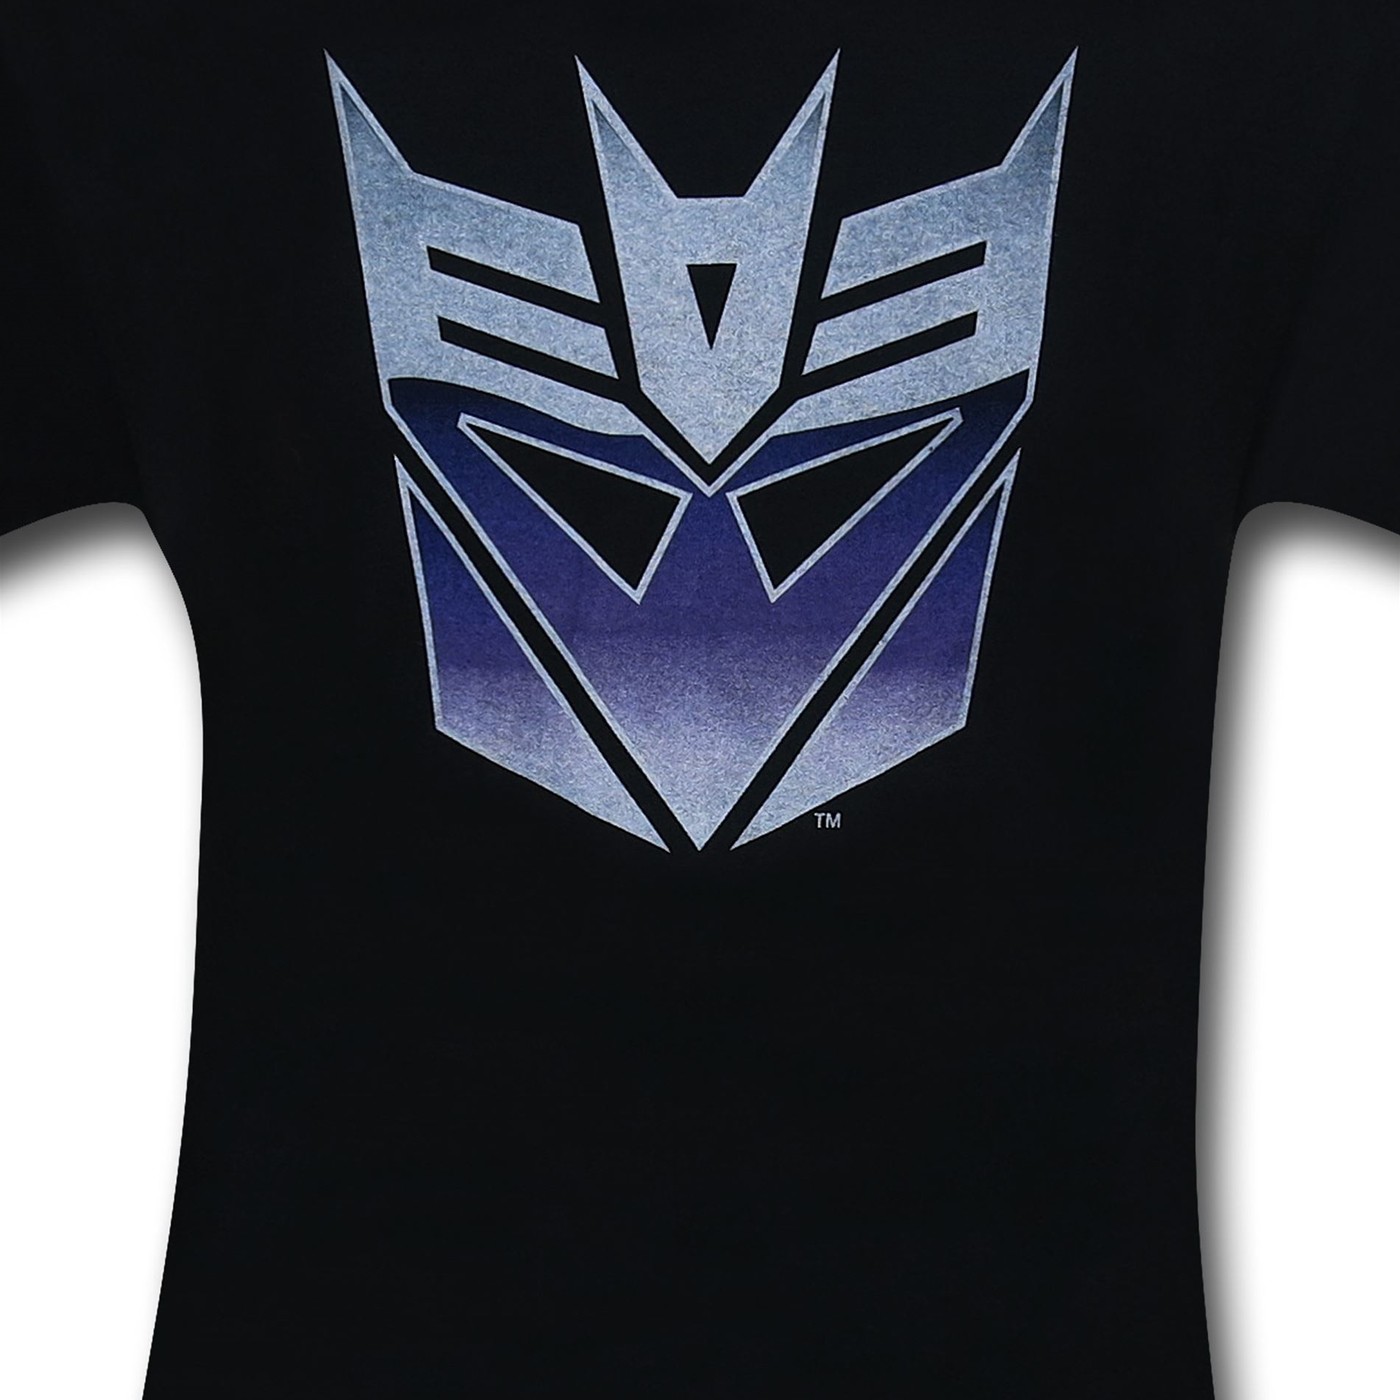 Transformers Decepticon Logo Black T-Shirt